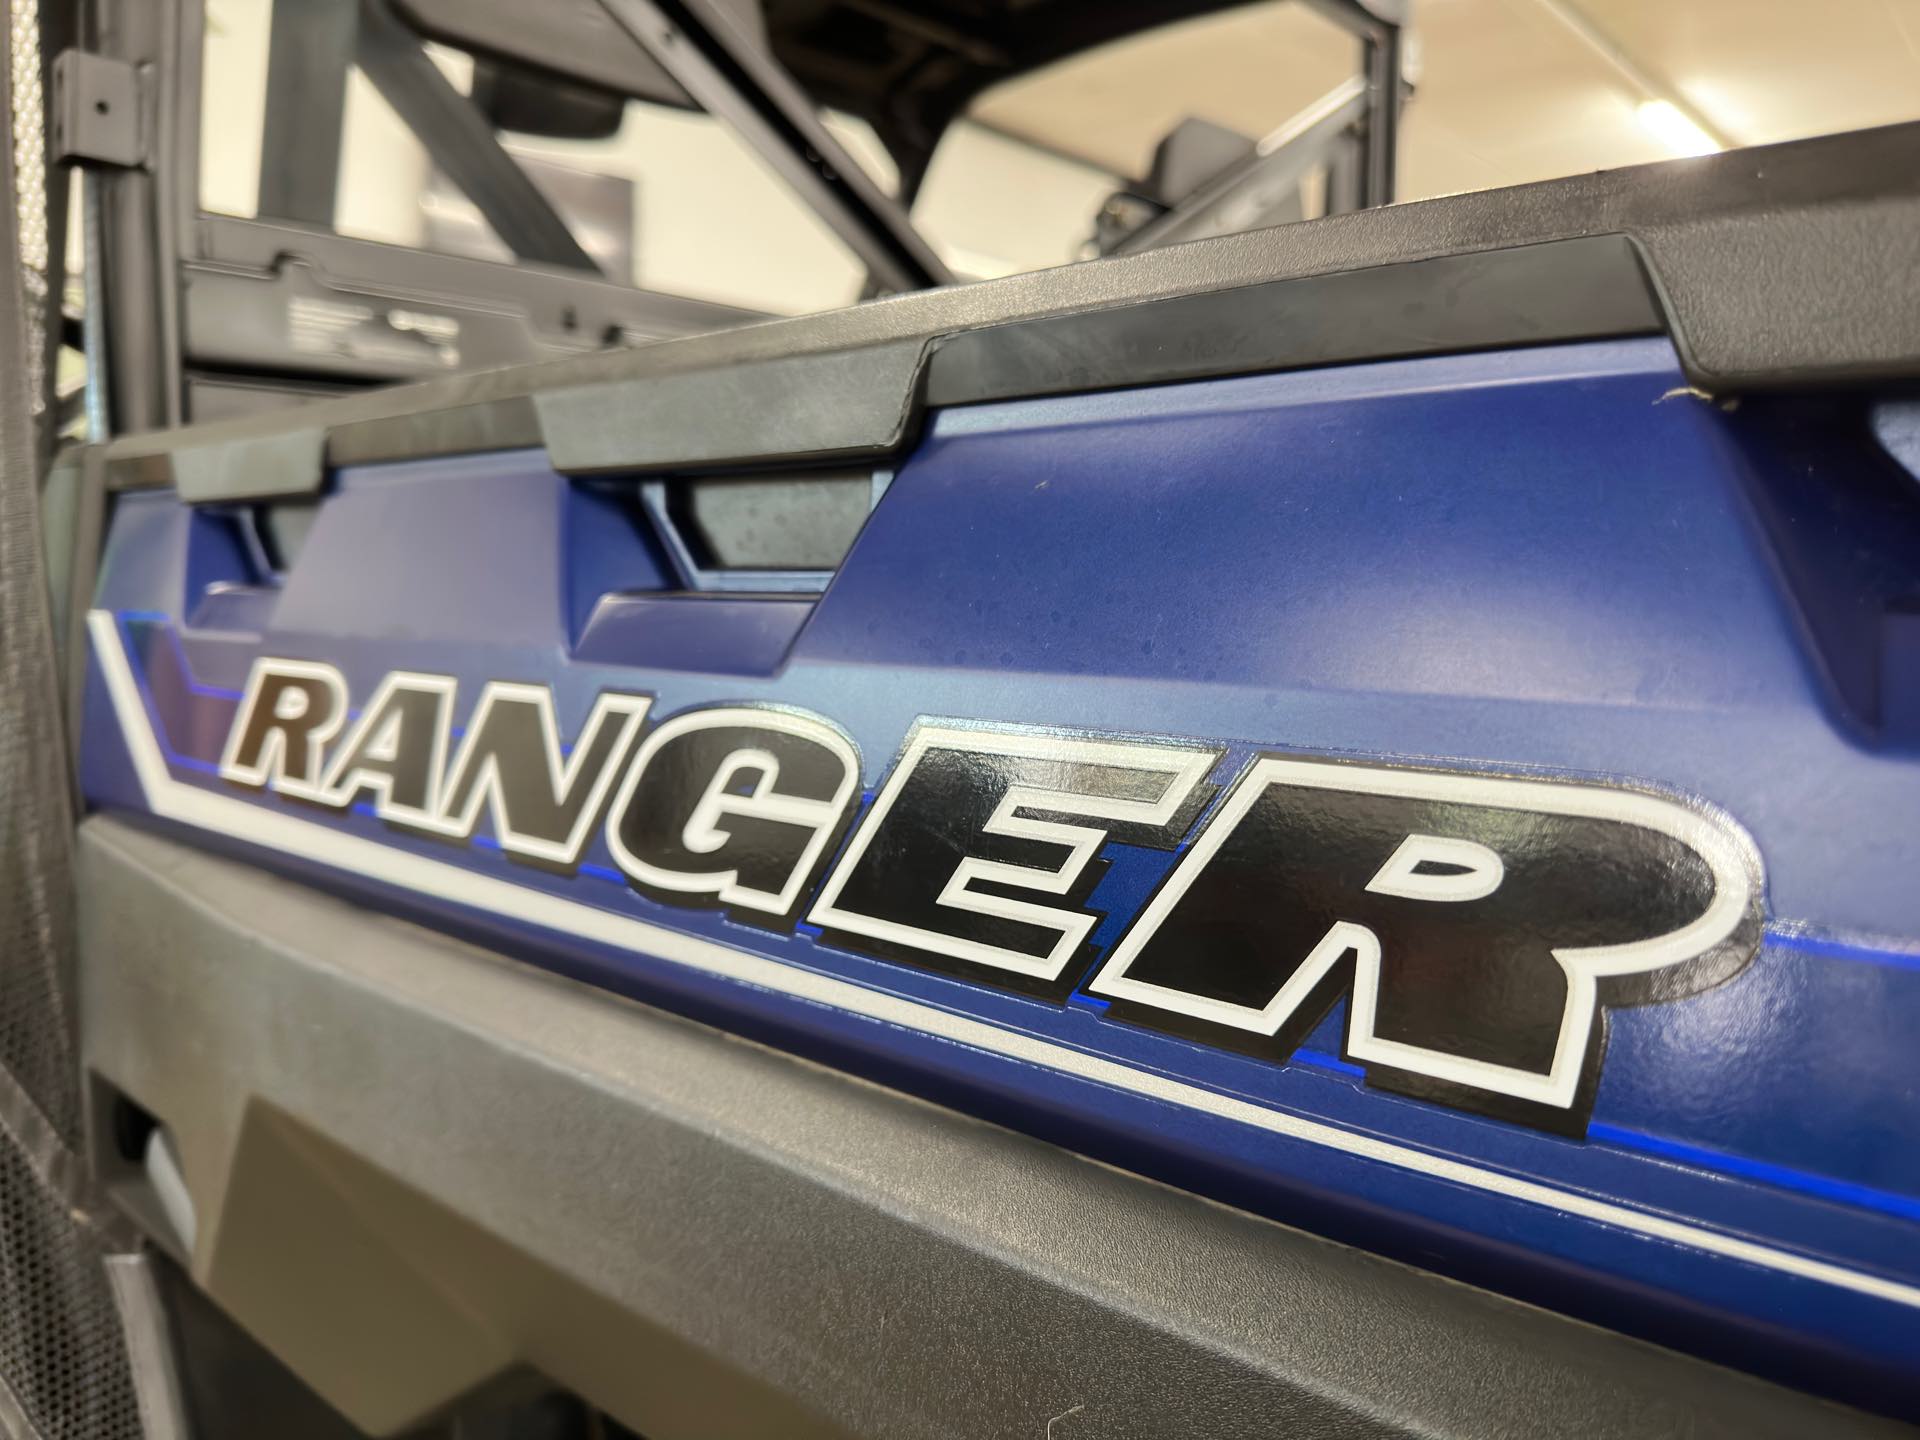 2021 Polaris Ranger XP 1000 Premium at ATVs and More